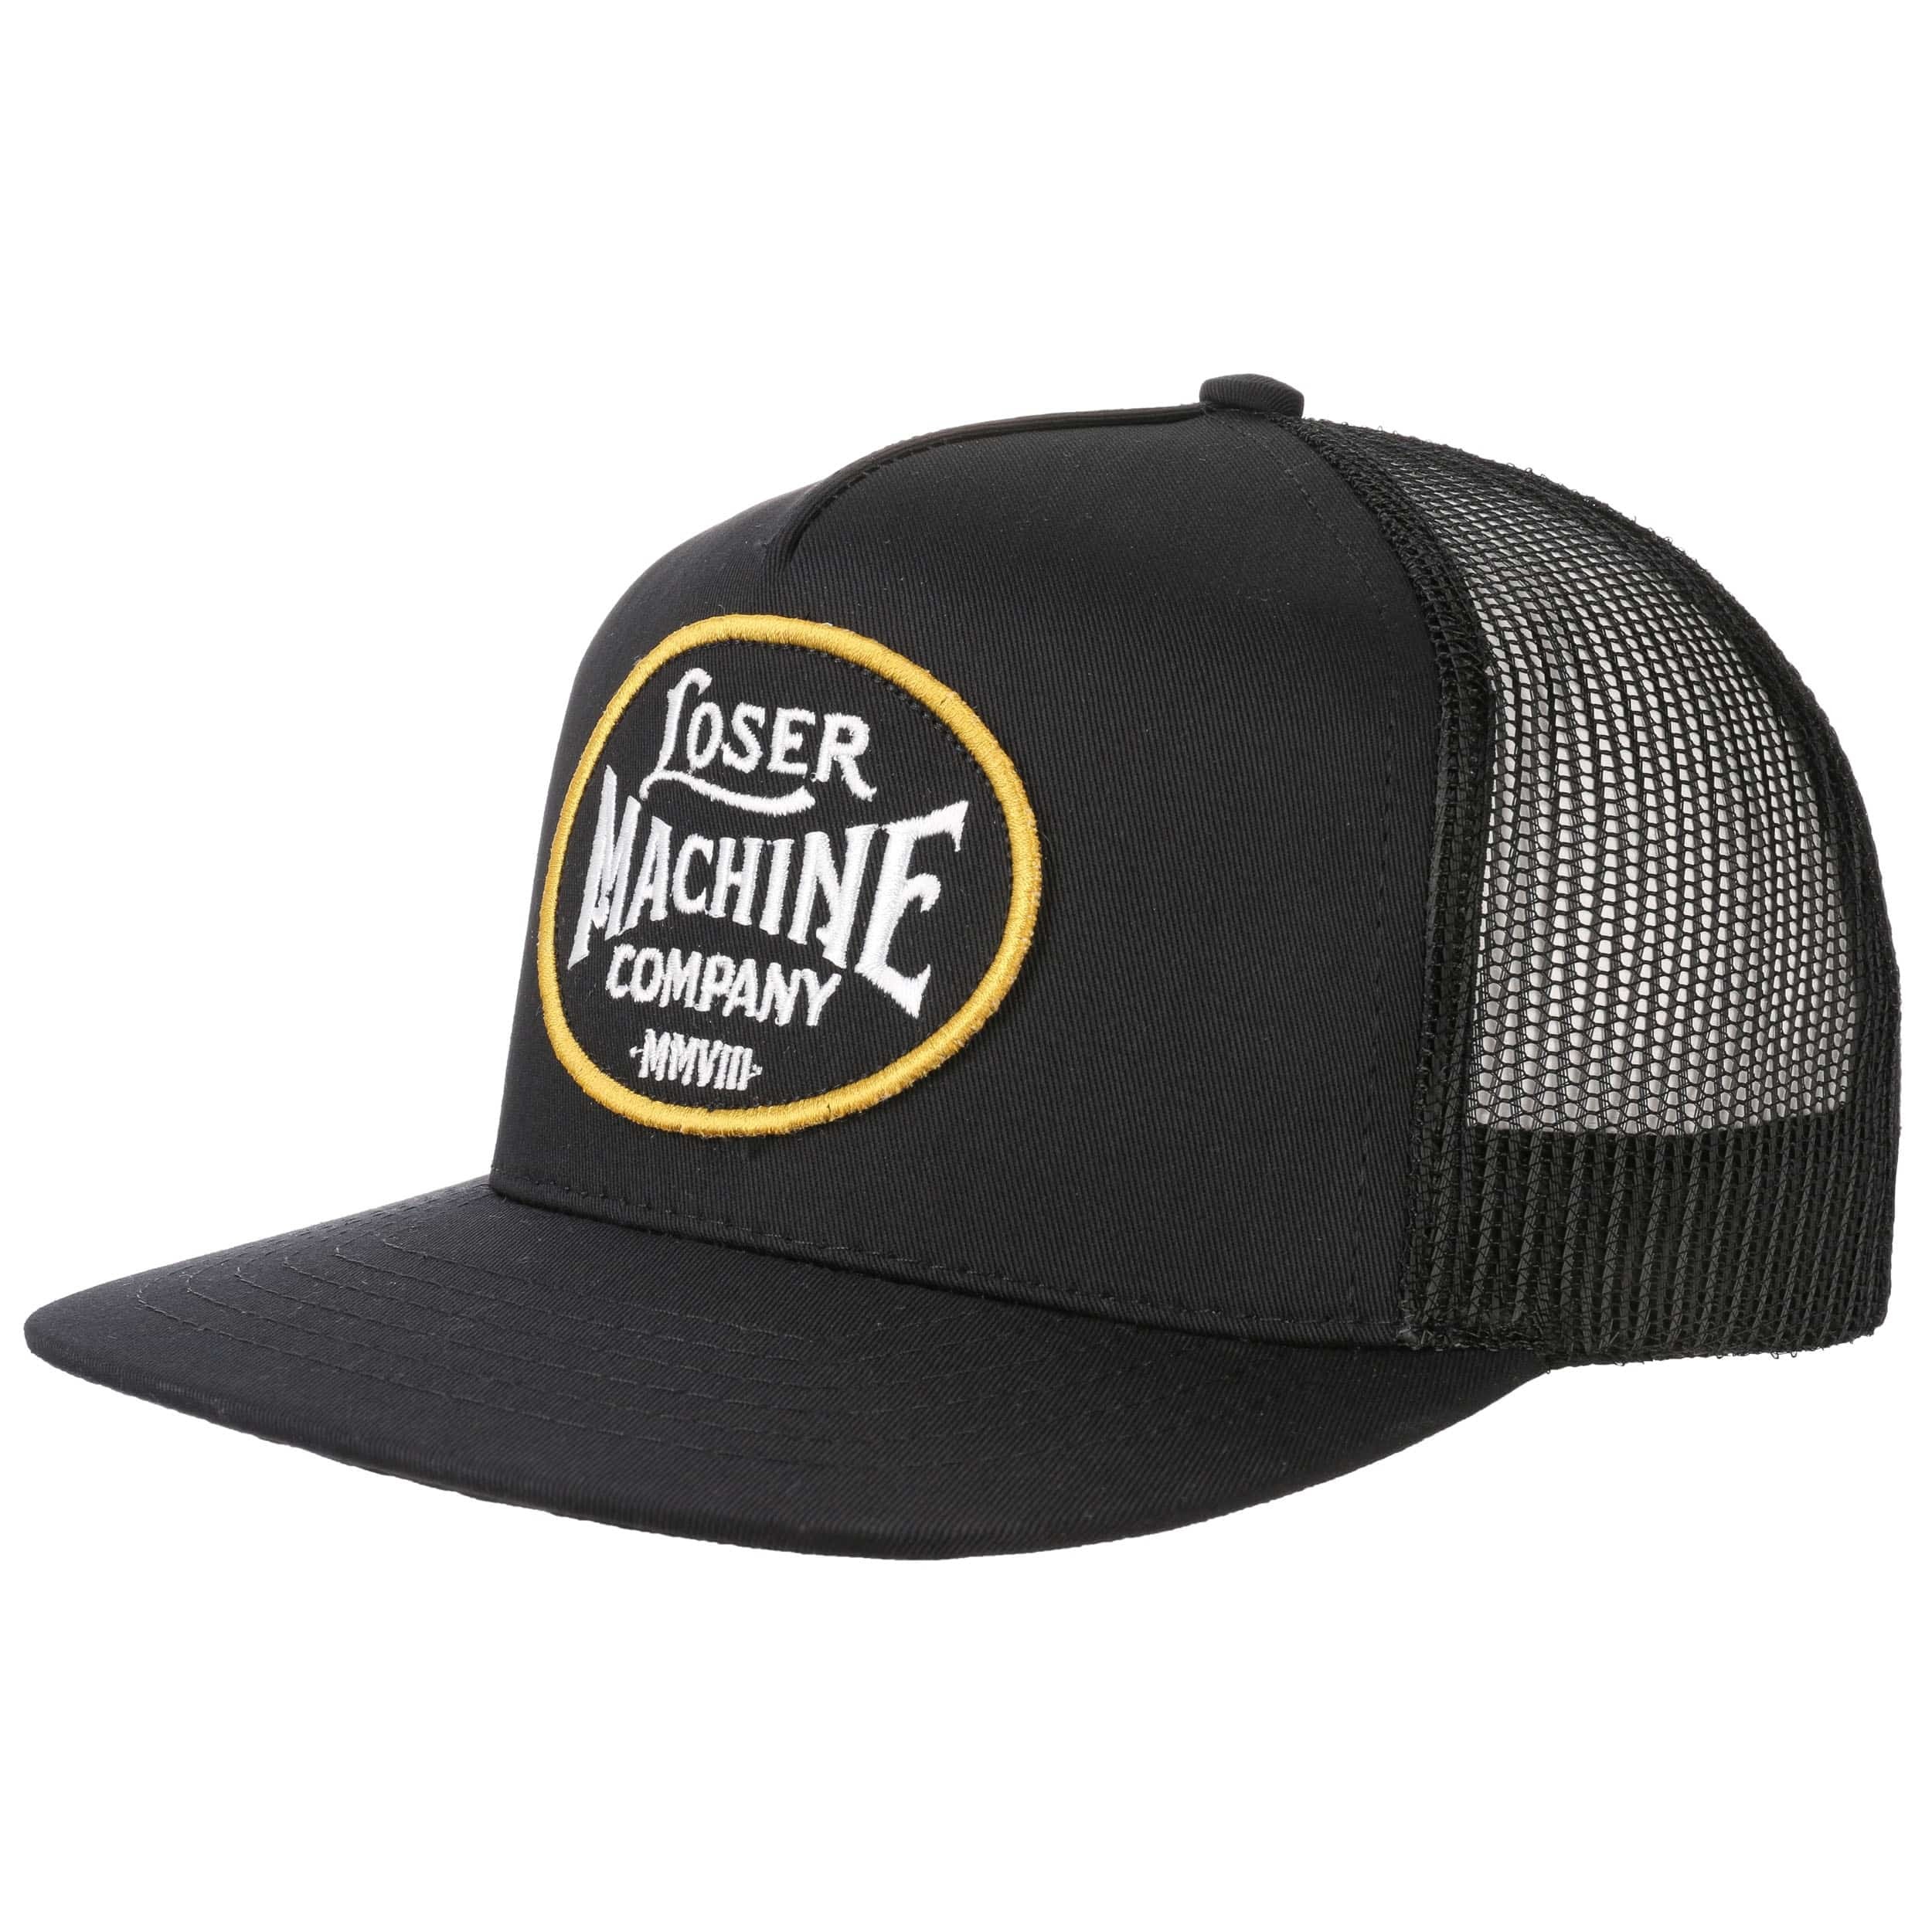 Company Trucker Cap by Loser Machine, EUR 34,95 > Hats, caps & beanies shop online